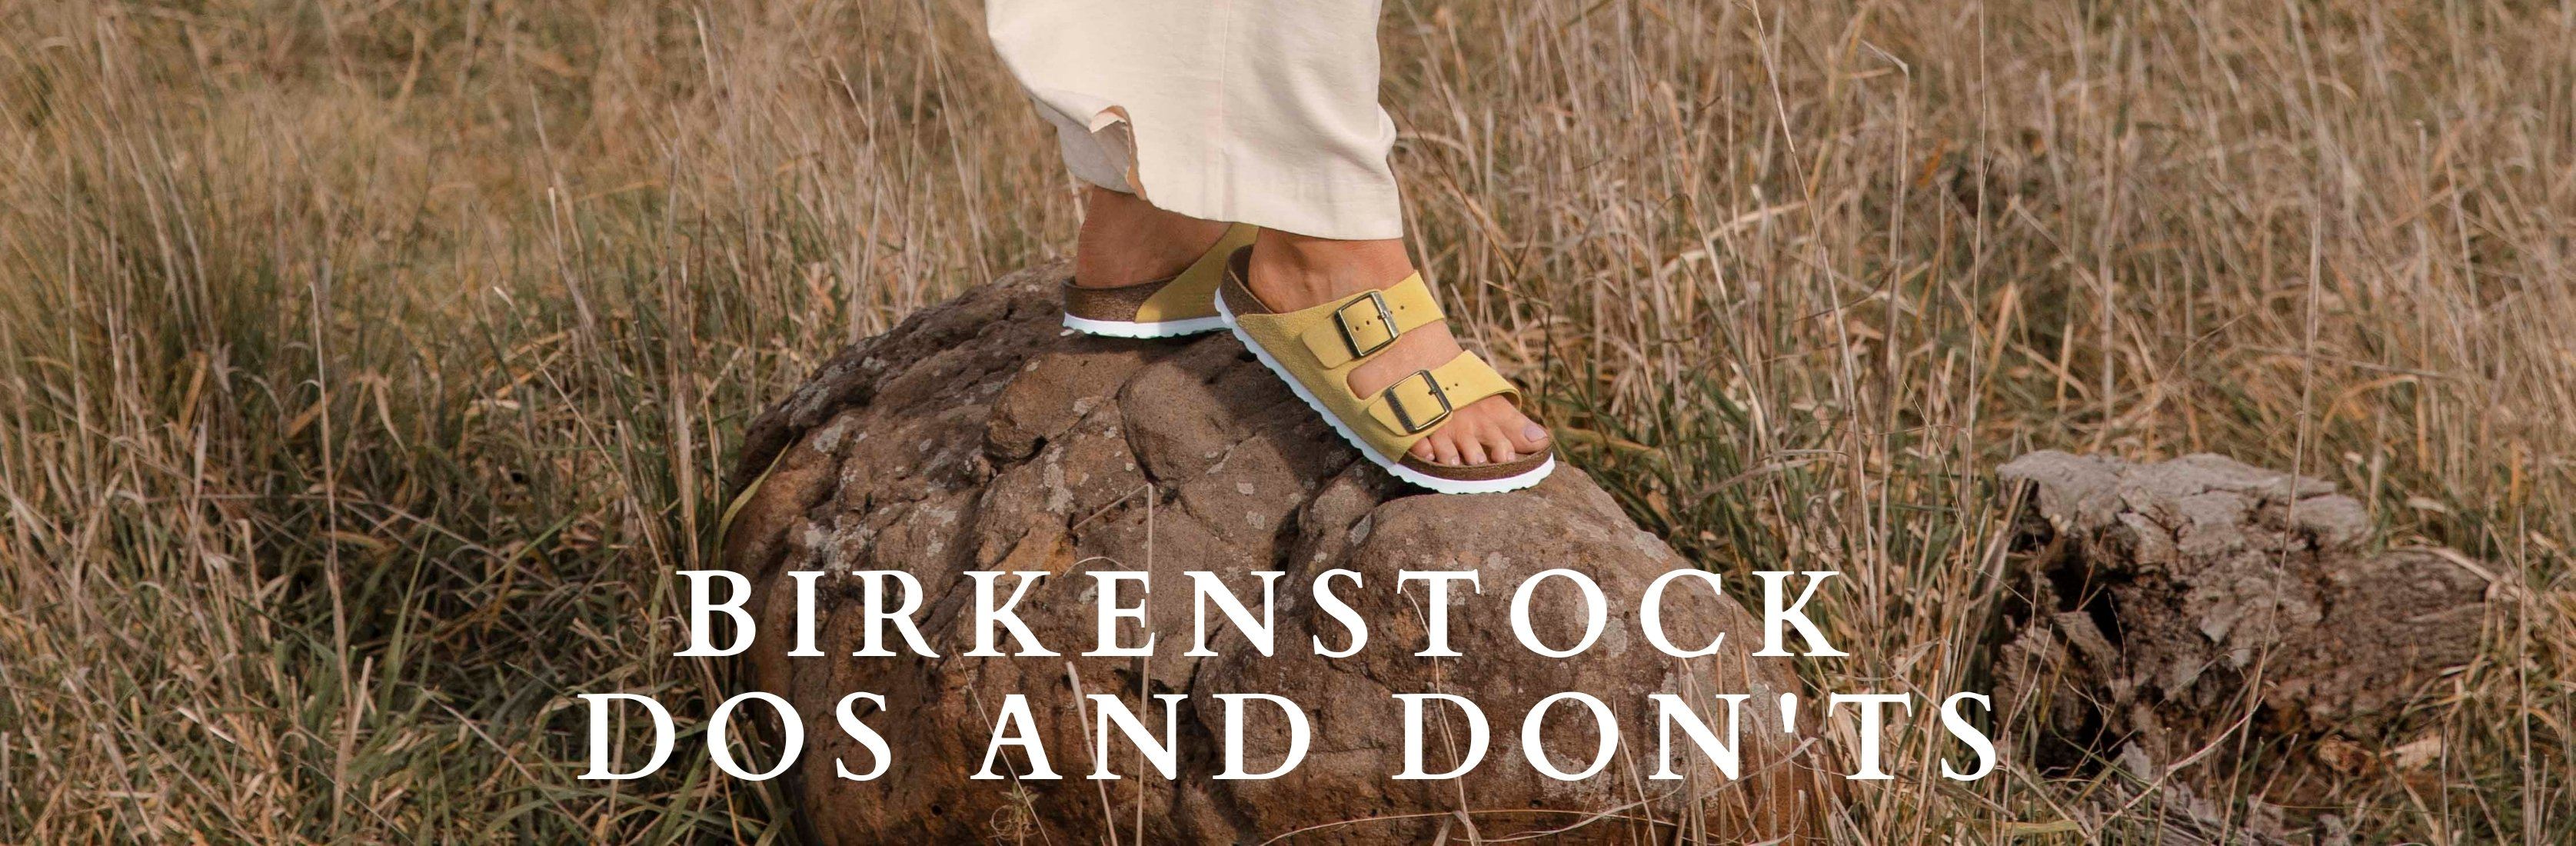 Birkenstock Dos and Don'ts - Birkenstock Hahndorf